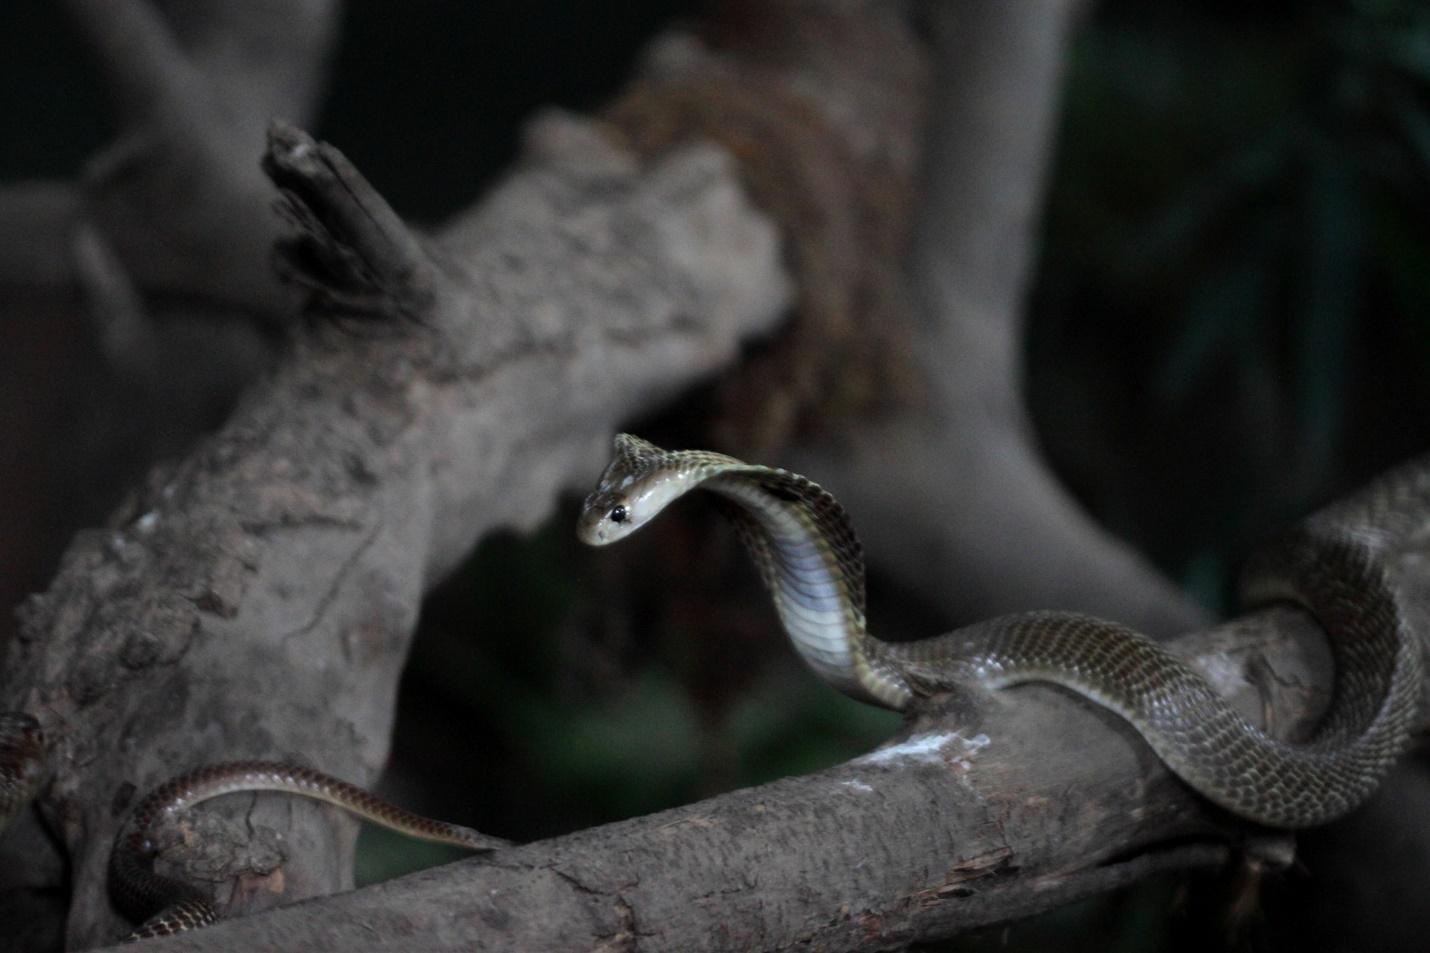 Katraj Snake Park, near Pune, Maharashtra by lingeringcoldness